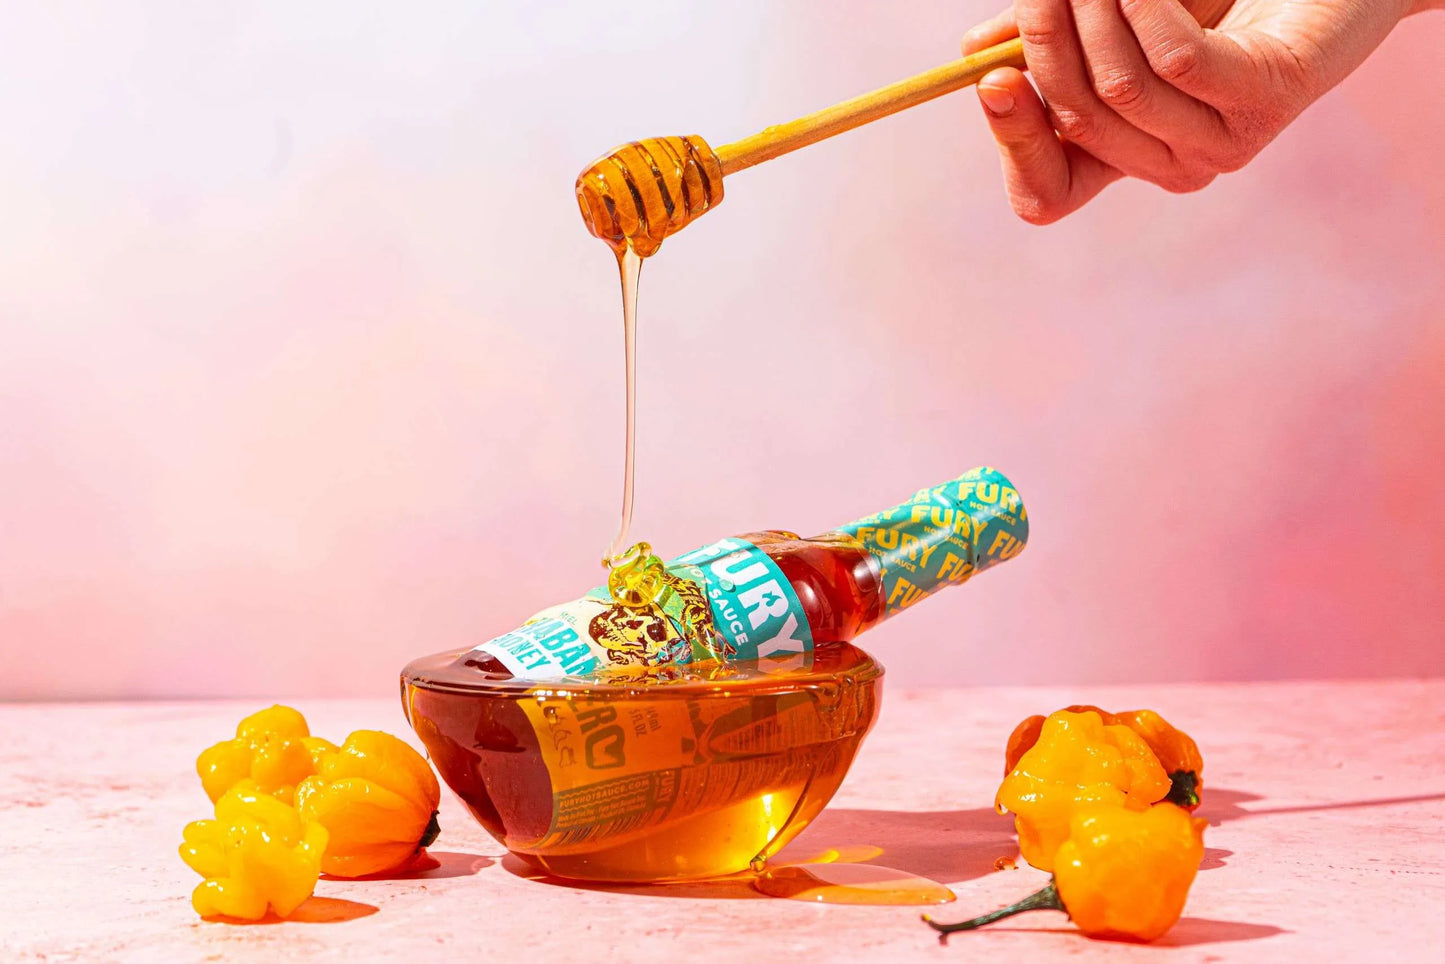 Fury Habanero Honey Hot Sauce - 5 oz